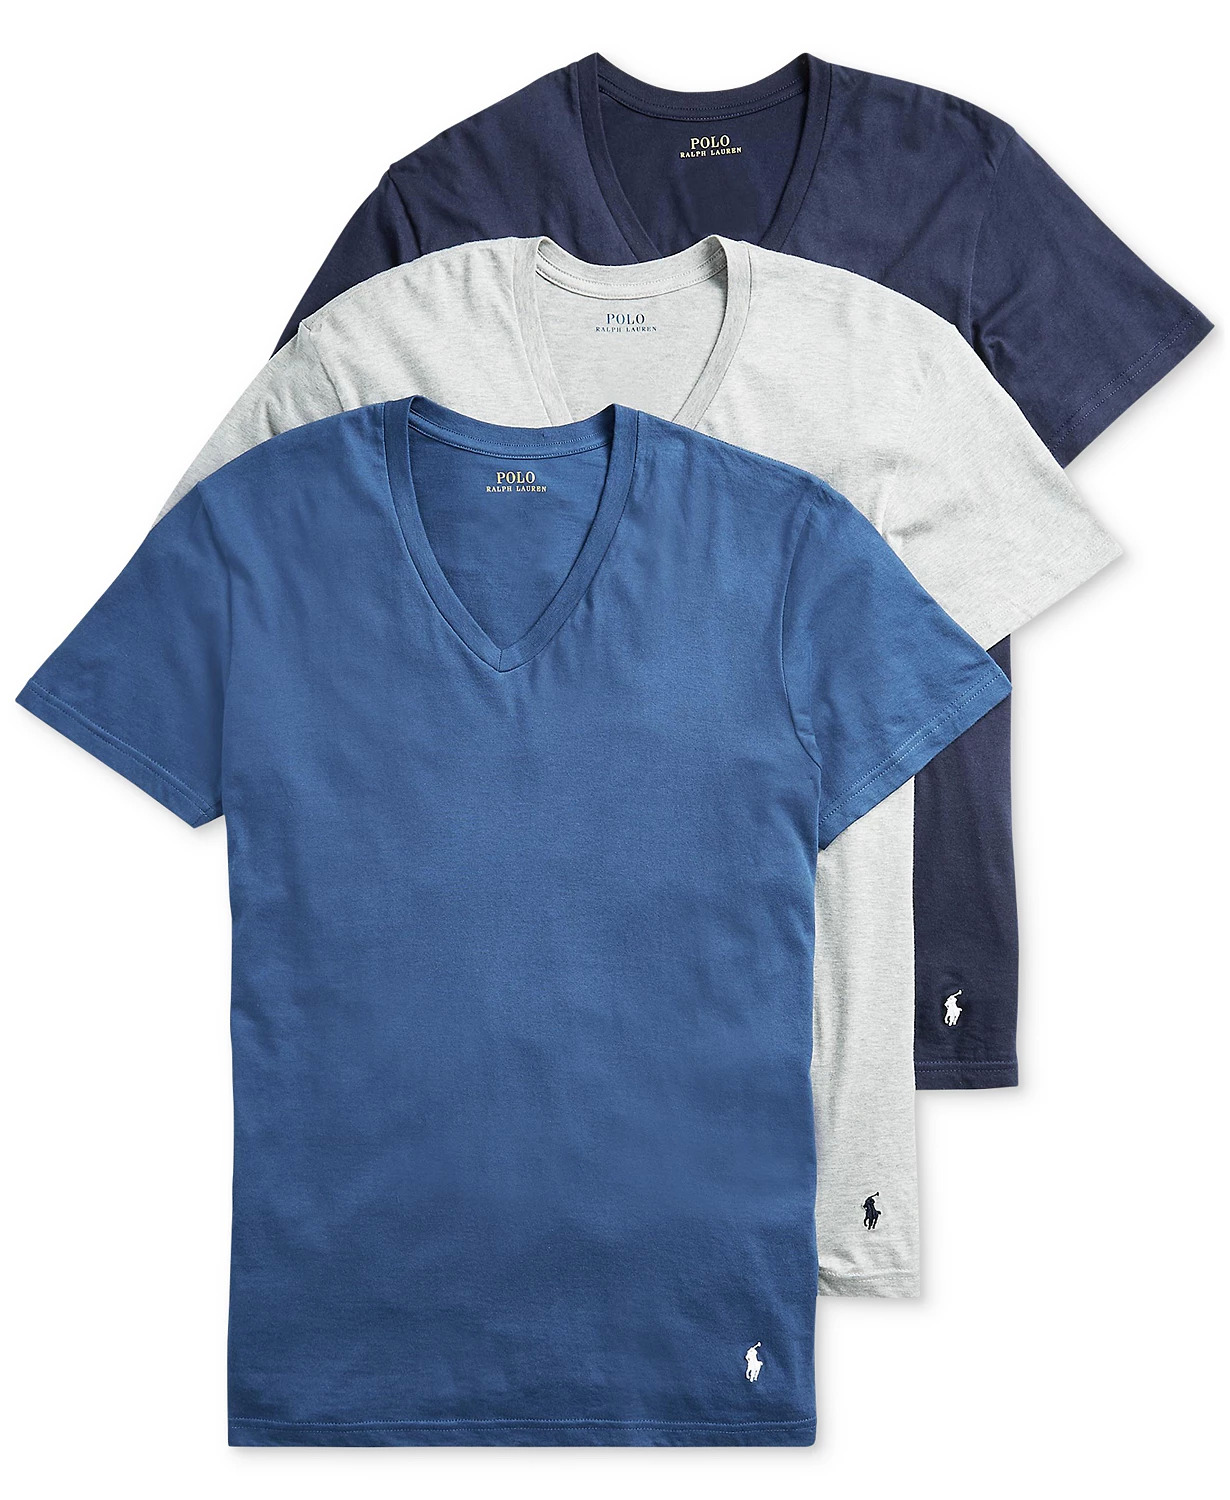 3-Pack Polo Ralph Lauren Men's Slim Fit Classic T-Shirts $17 ($ each) +